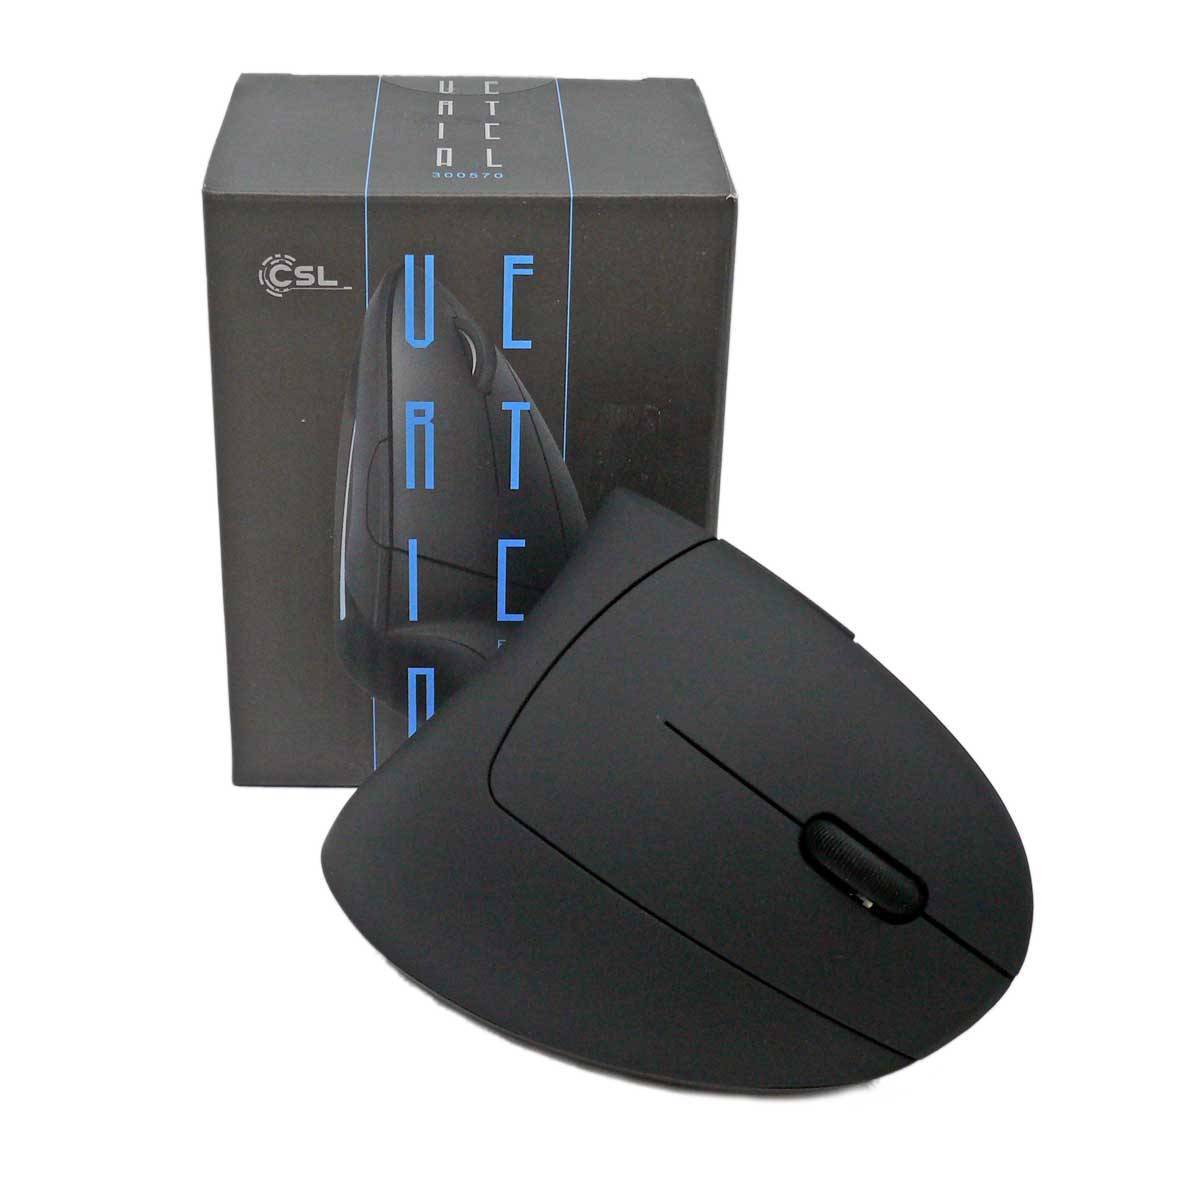 CSL Vertical Mouse Wireless/Bluetoo